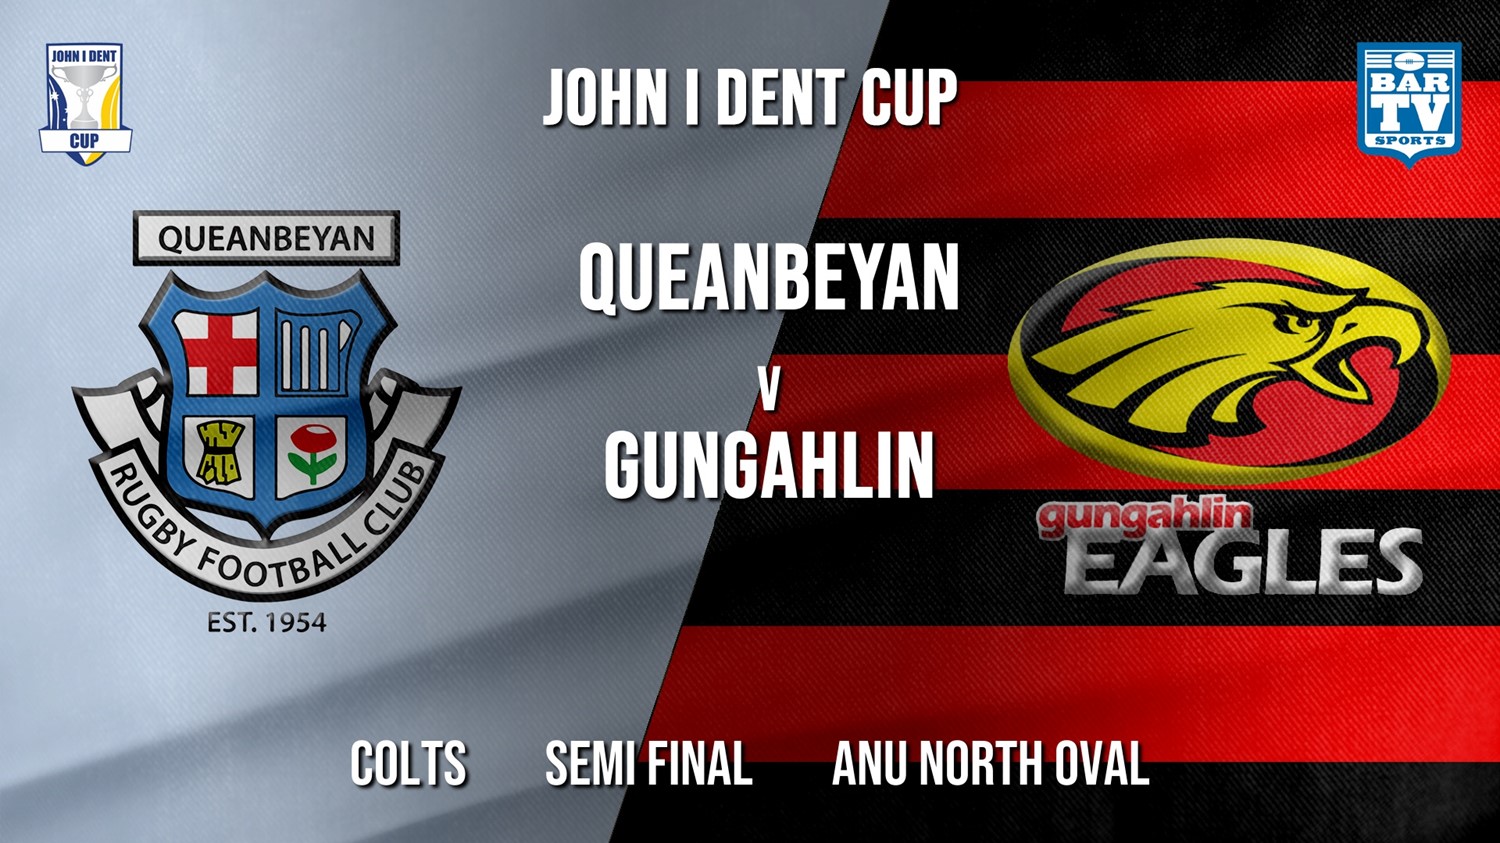 John I Dent Semi Final - Colts - Queanbeyan Whites v Gungahlin Eagles Minigame Slate Image